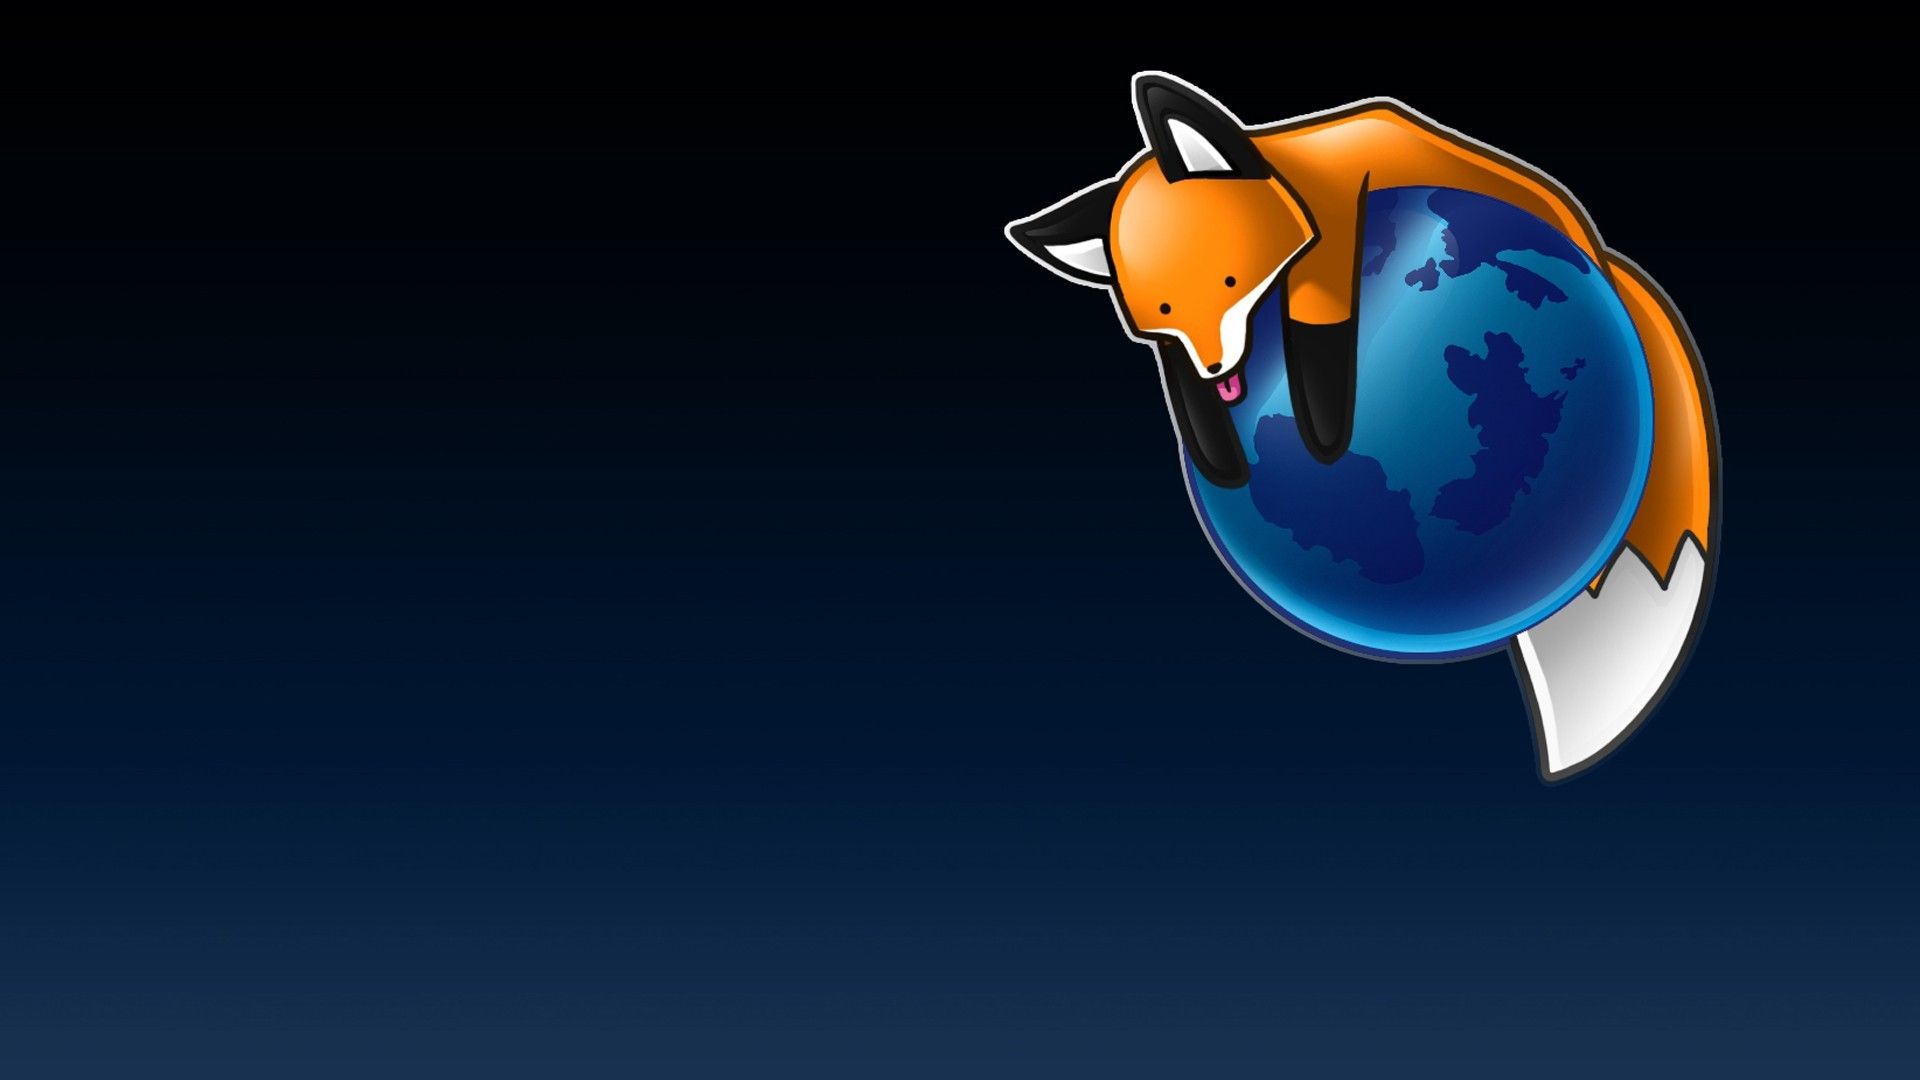 Wallpaper, illustration, simple background, planet, Earth, logo, cartoon, Mozilla Firefox, stupid fox, screenshot, computer wallpaper 1920x1080